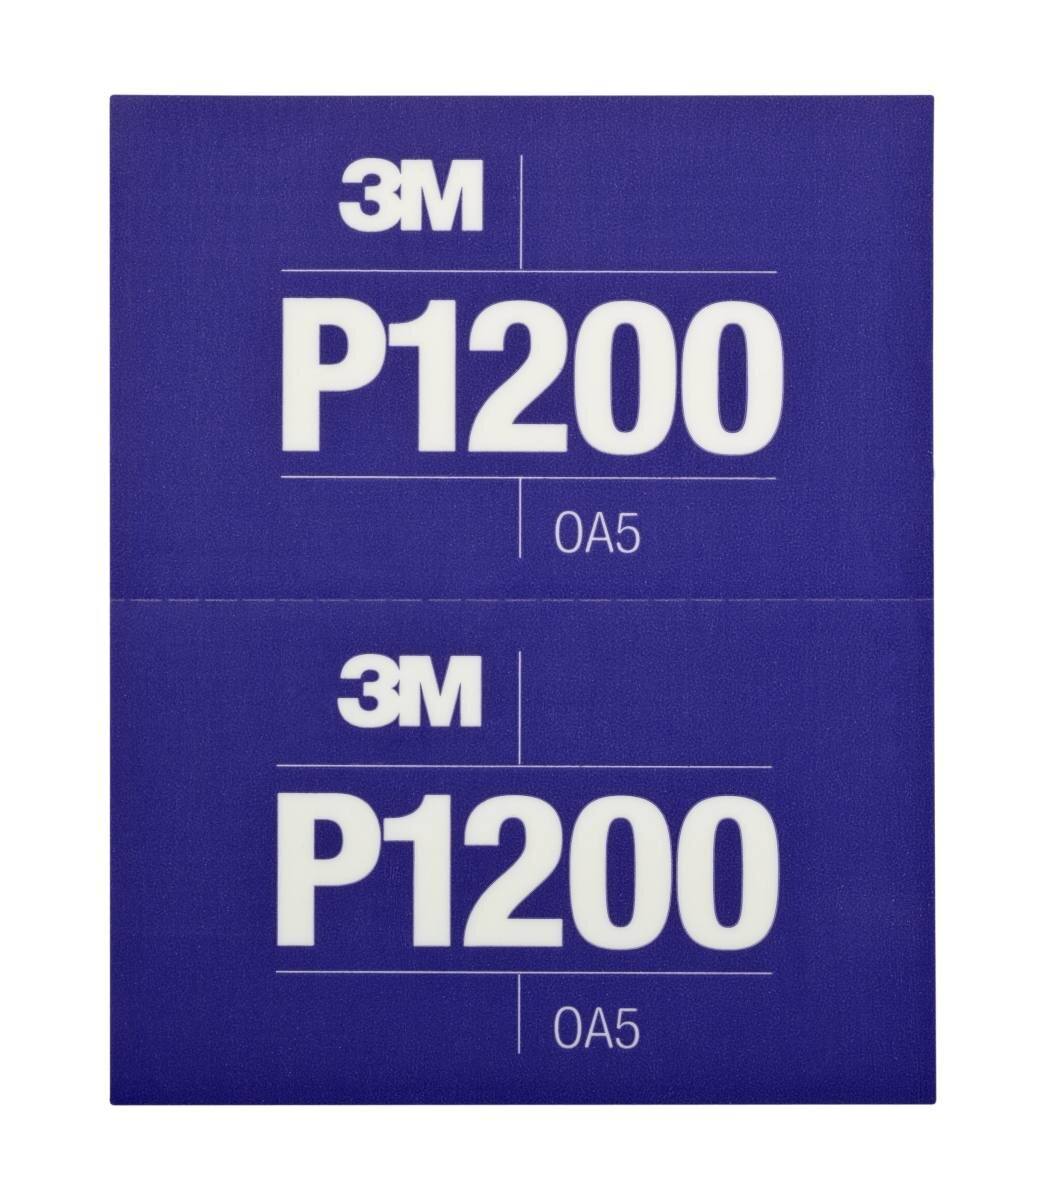 3M Hookit Flexible sanding strips, purple, 140 mm x 171 mm, P1200, 25 pieces / box